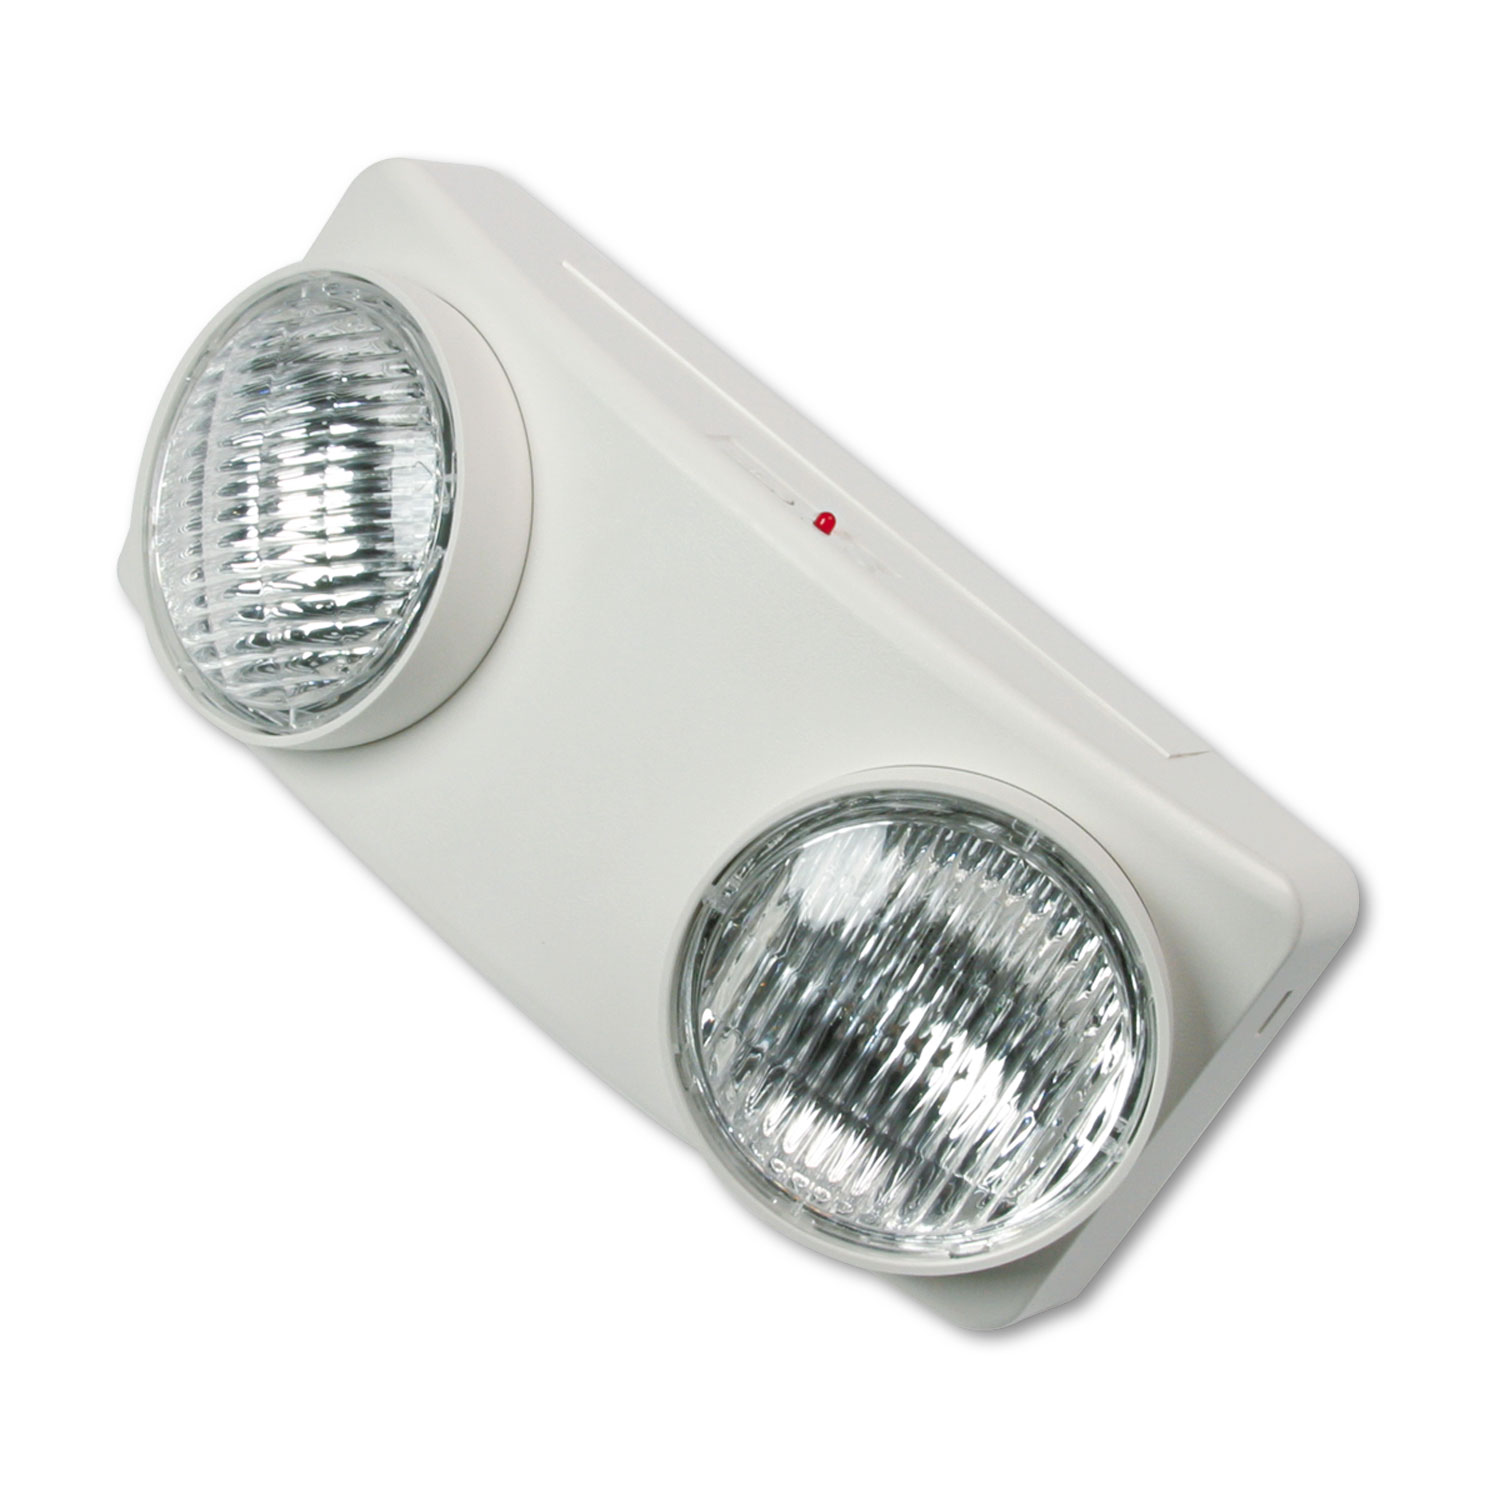  Tatco 70012 Swivel Head Twin Beam Emergency Lighting Unit, 12.75w x 4d x 5.5h, White (TCO70012) 